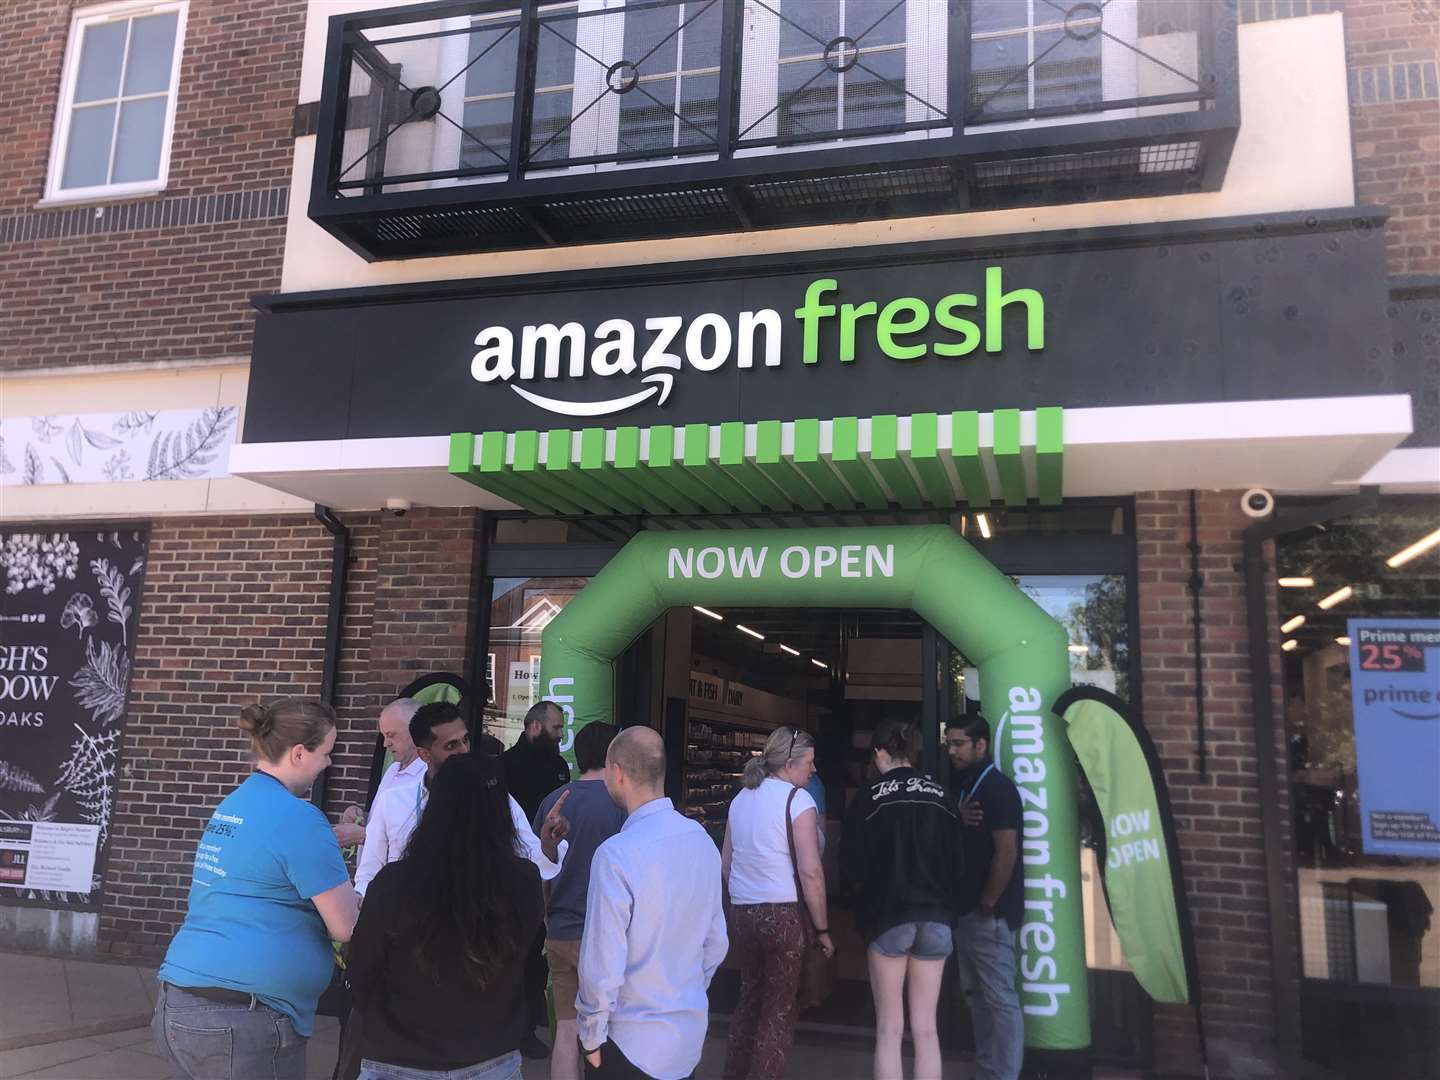 Amazon Fresh store opens in Bligh Meadow Shopping Centre in Sevenoaks